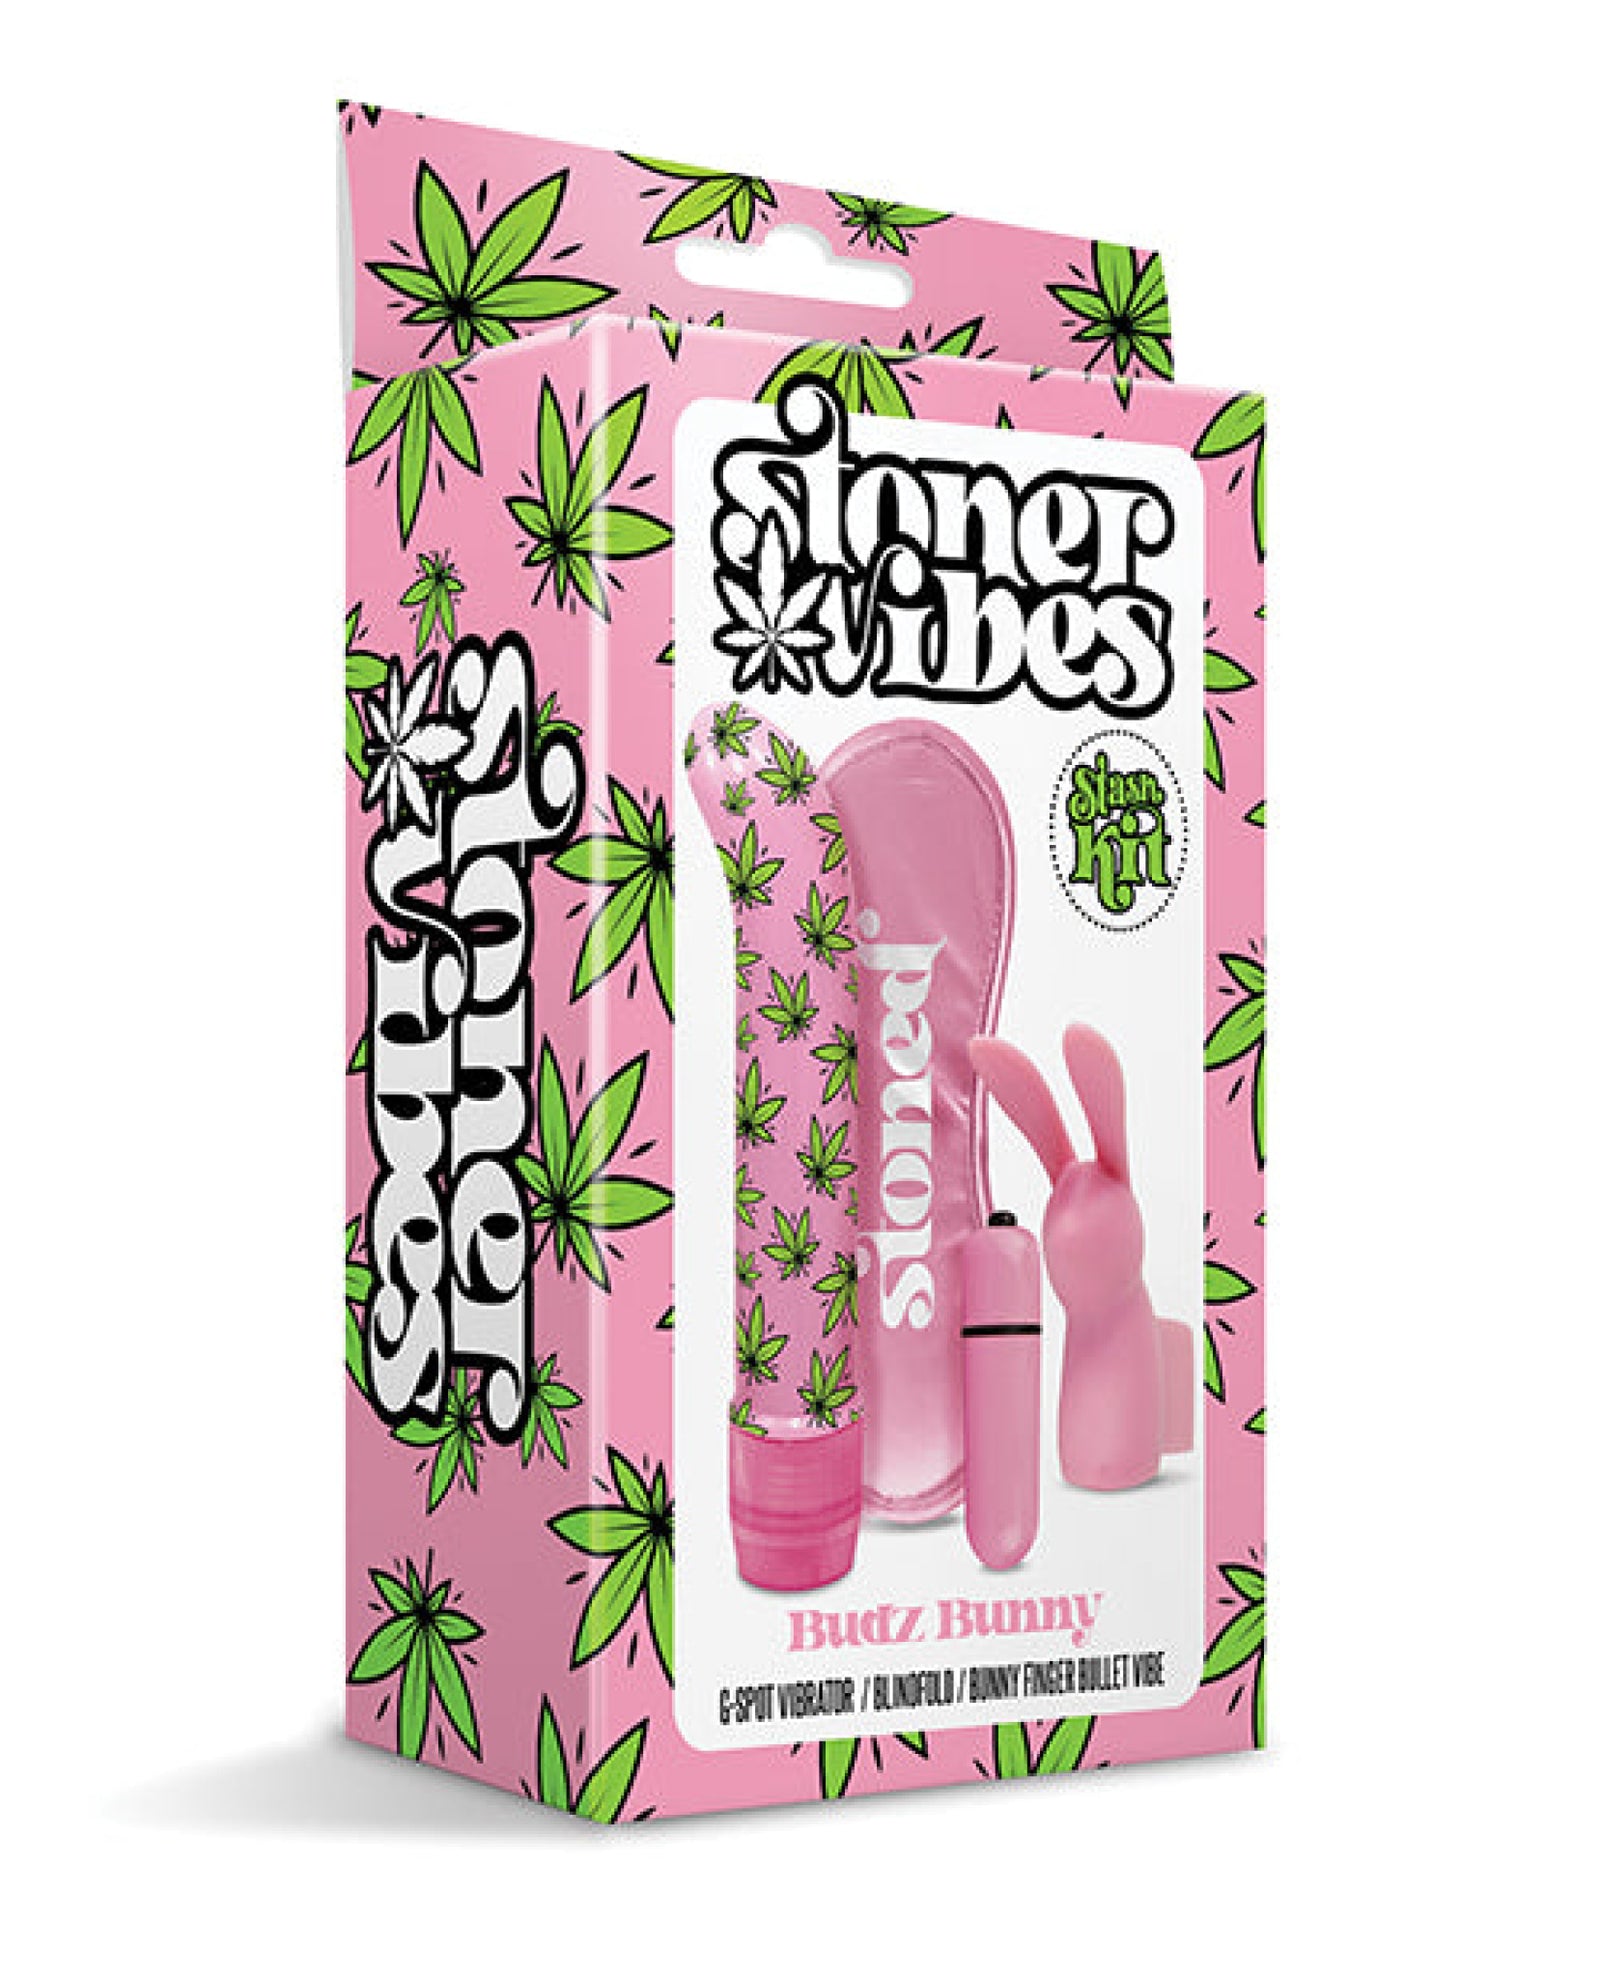 Stoner Vibes Budz Bunny Stash Kit - Pink Global Novelties